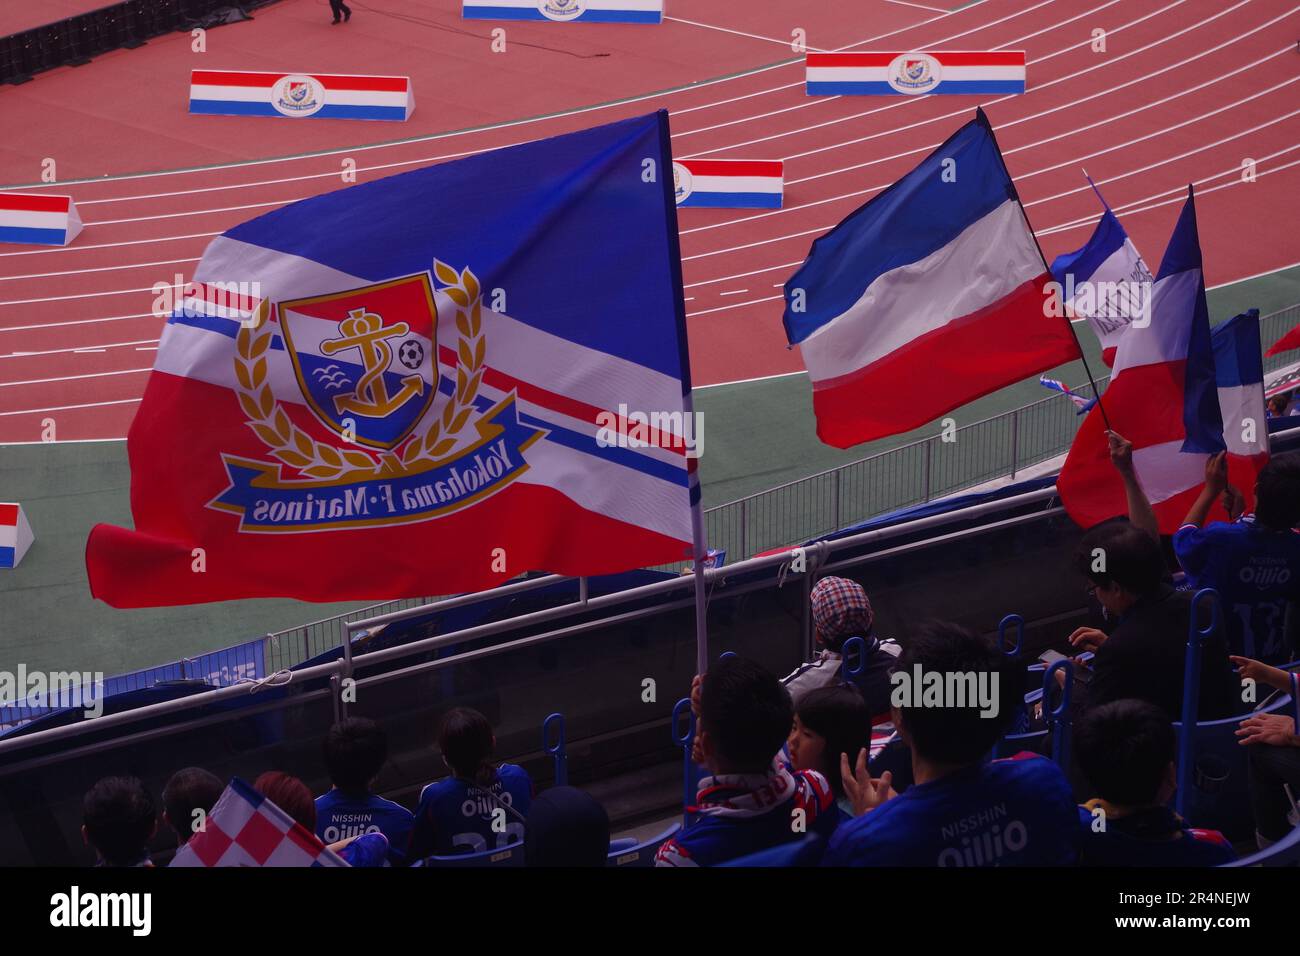 Flags Flying at Yokohama F. Marinos Football Game Stock Photo